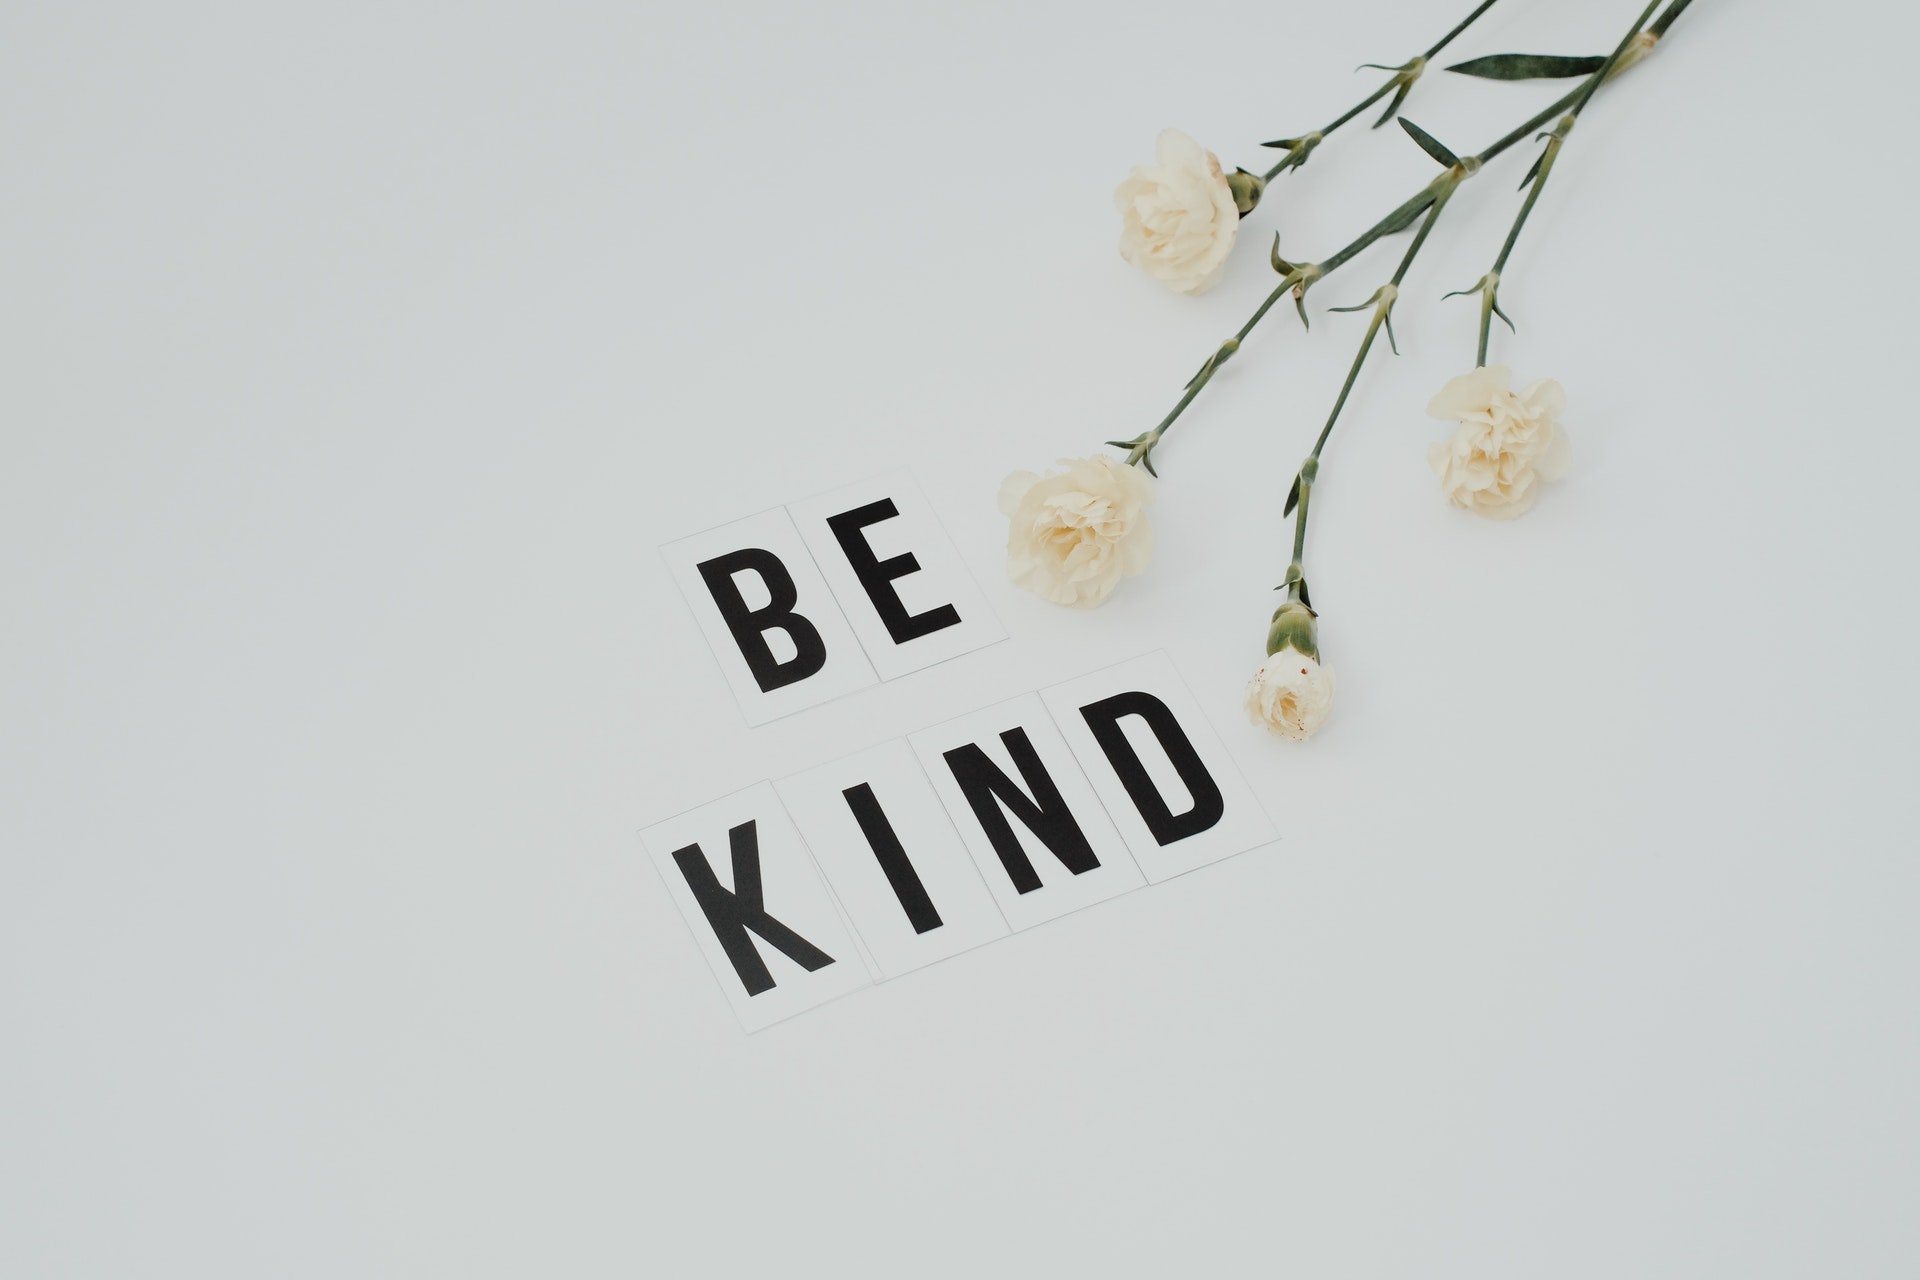 Be kind. Kindness.